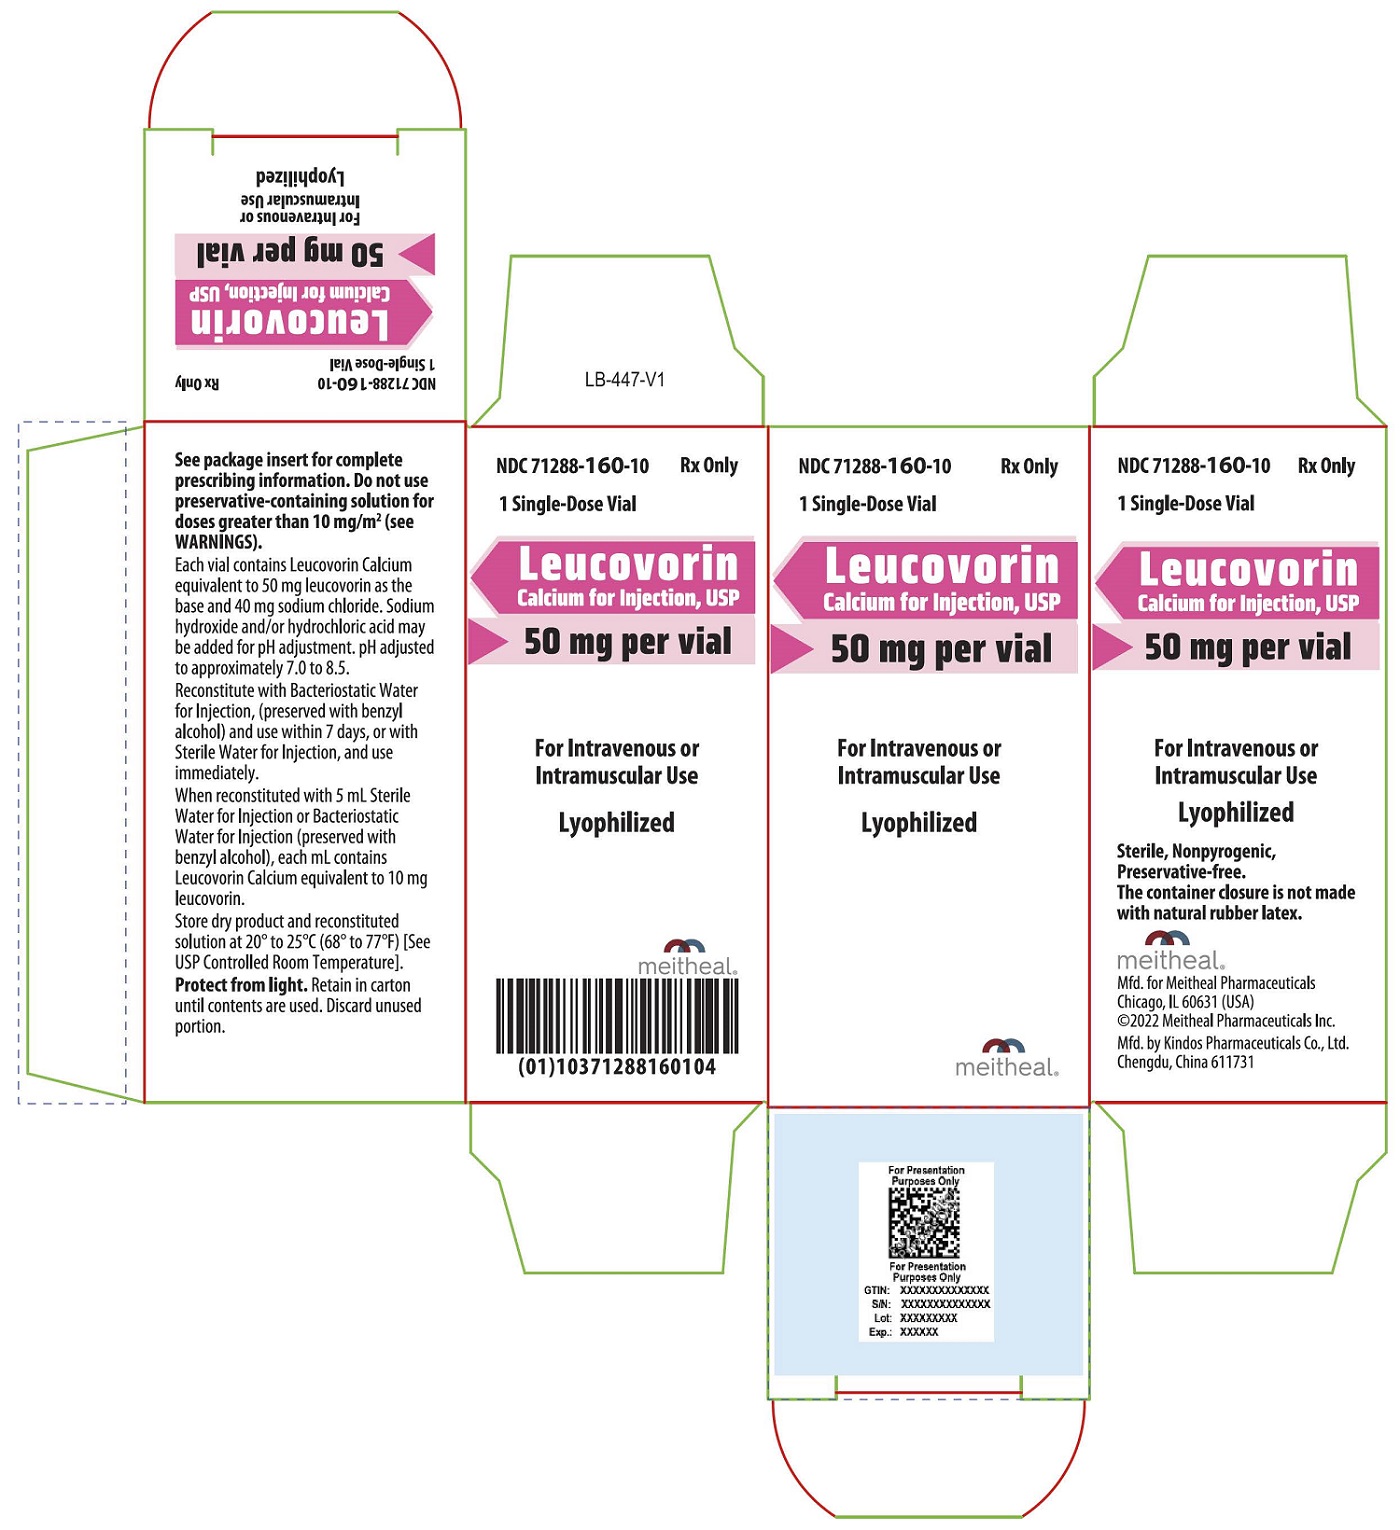 PRINCIPAL DISPLAY PANEL – Leucovorin Calcium for Injection, USP 50 mg Carton